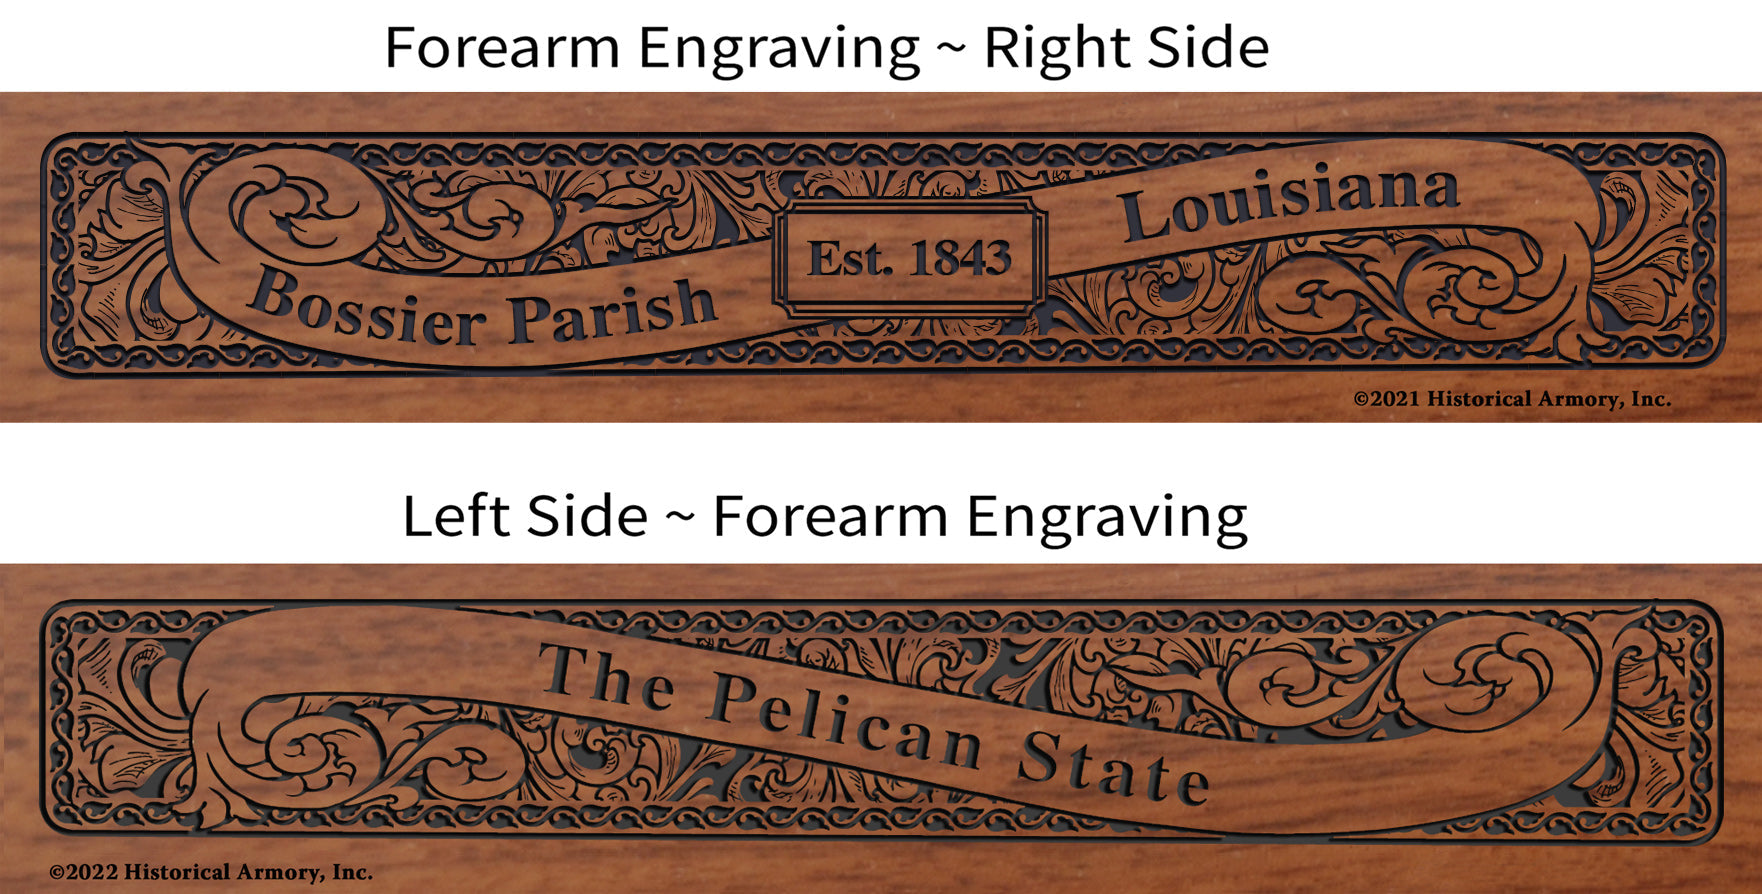 Bossier Parish Louisiana Engraved Rifle Forearm Right-Side